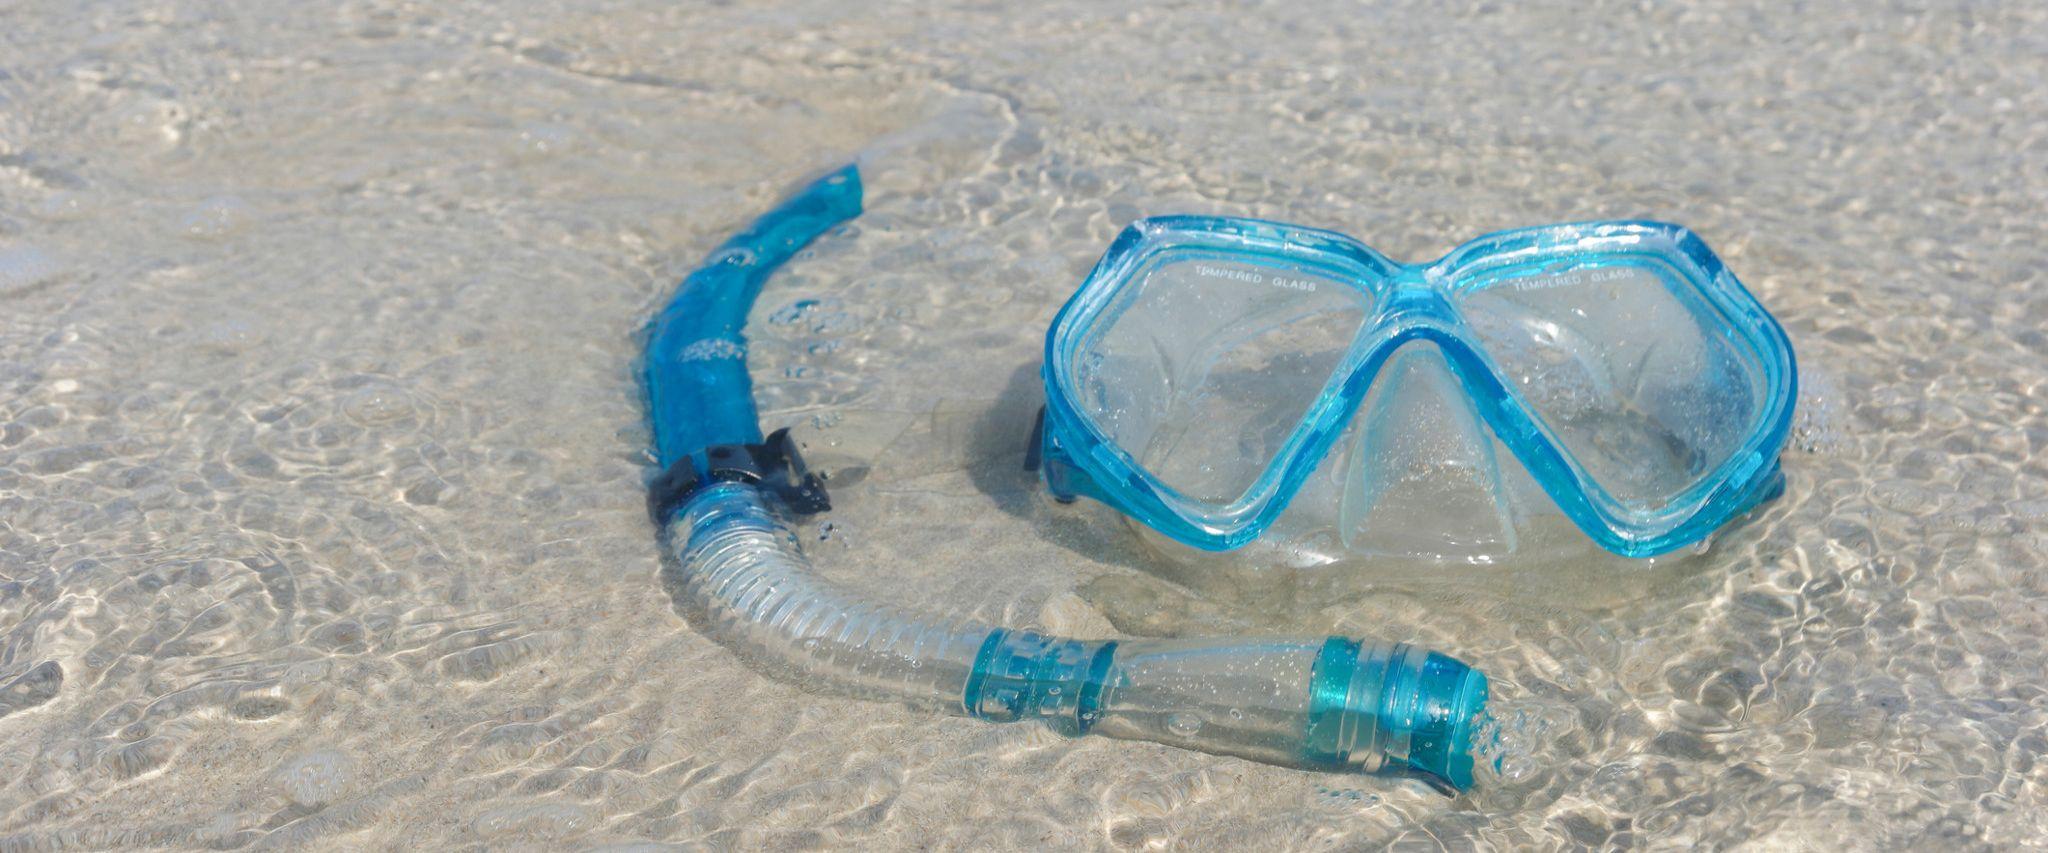 Snorkel gear on Alabama's beaches